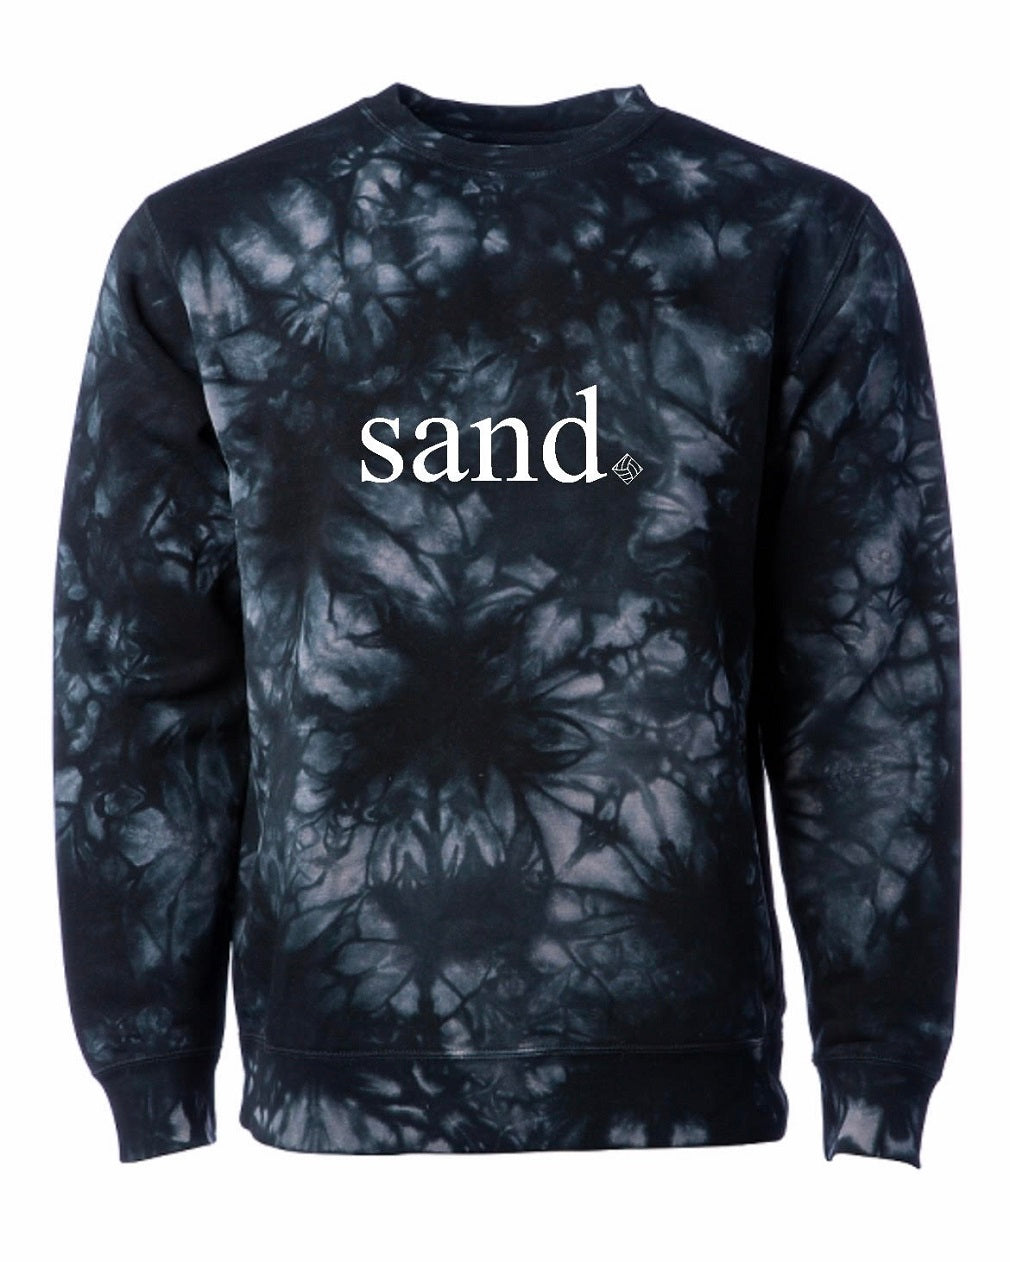 Sand Crewneck Sweatshirt - Tie Dye Colors